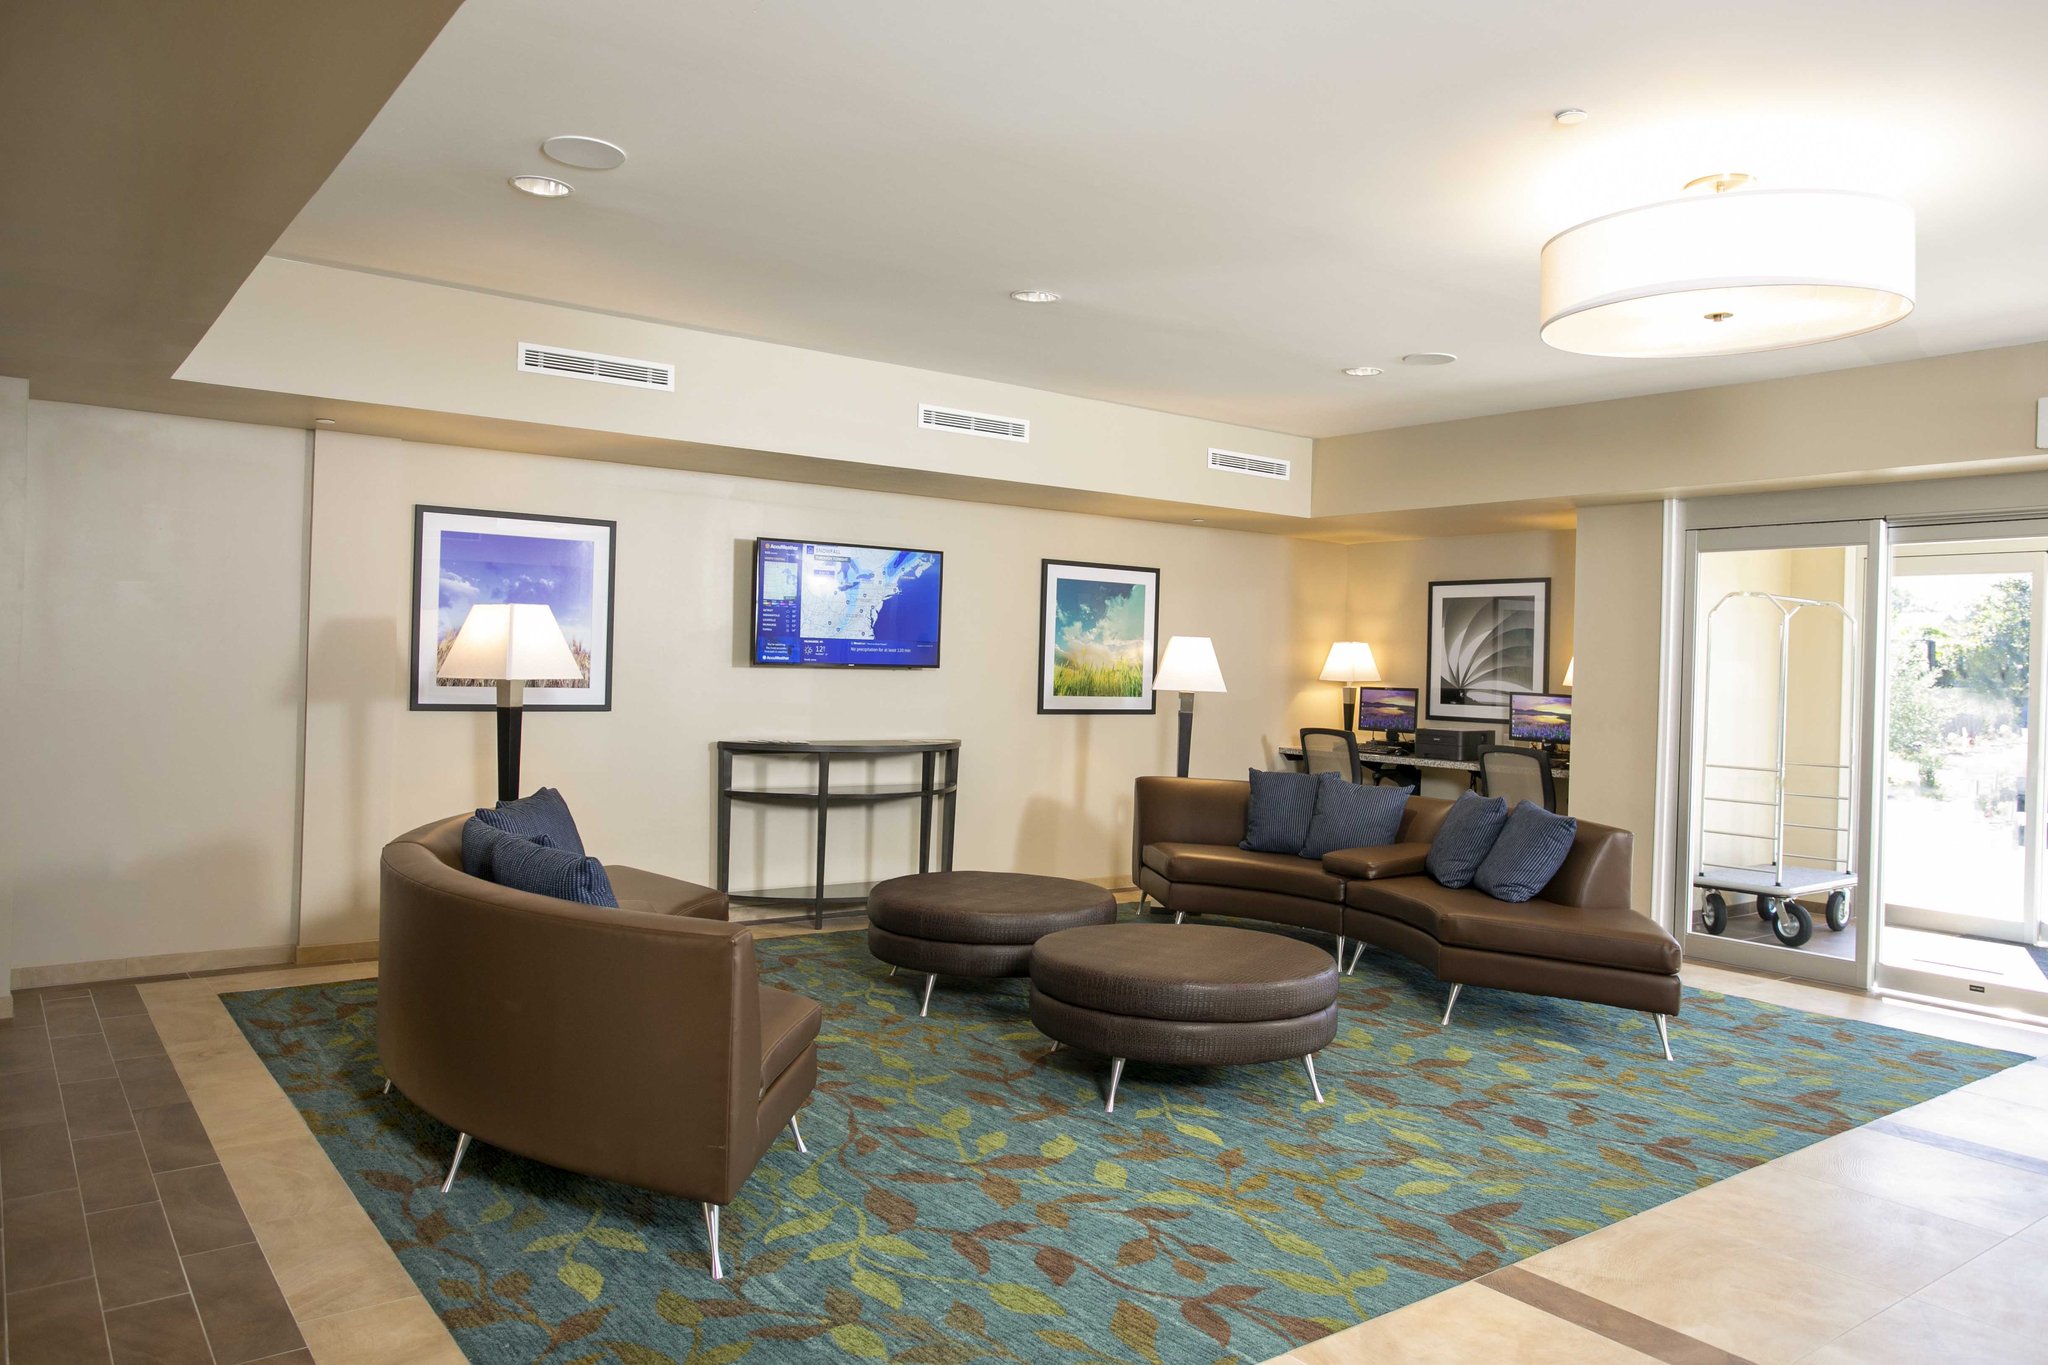 Candlewood Suites Jacksonville - Mayport